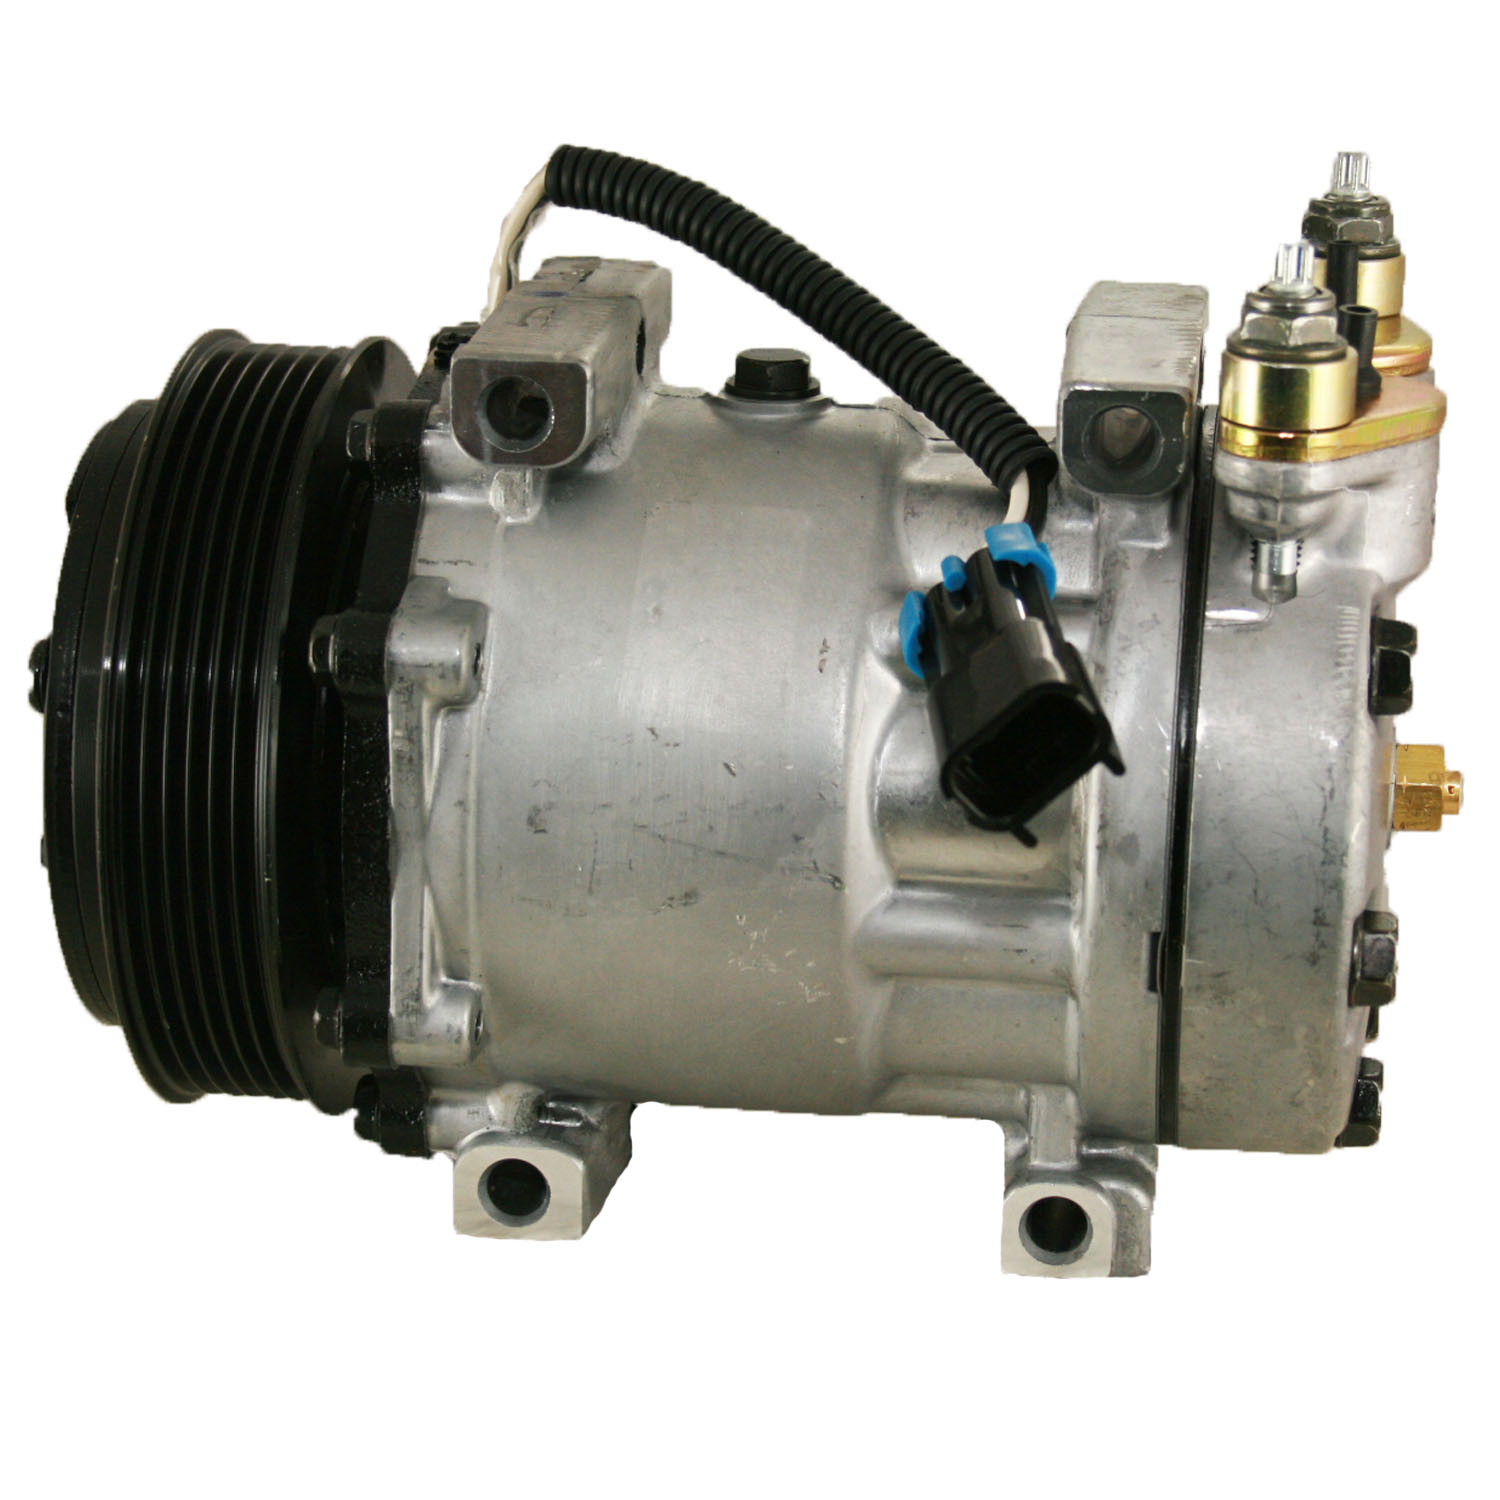 TCW Compressor 40609.6T1NEW New Product Image field_60b6a13a6e67c